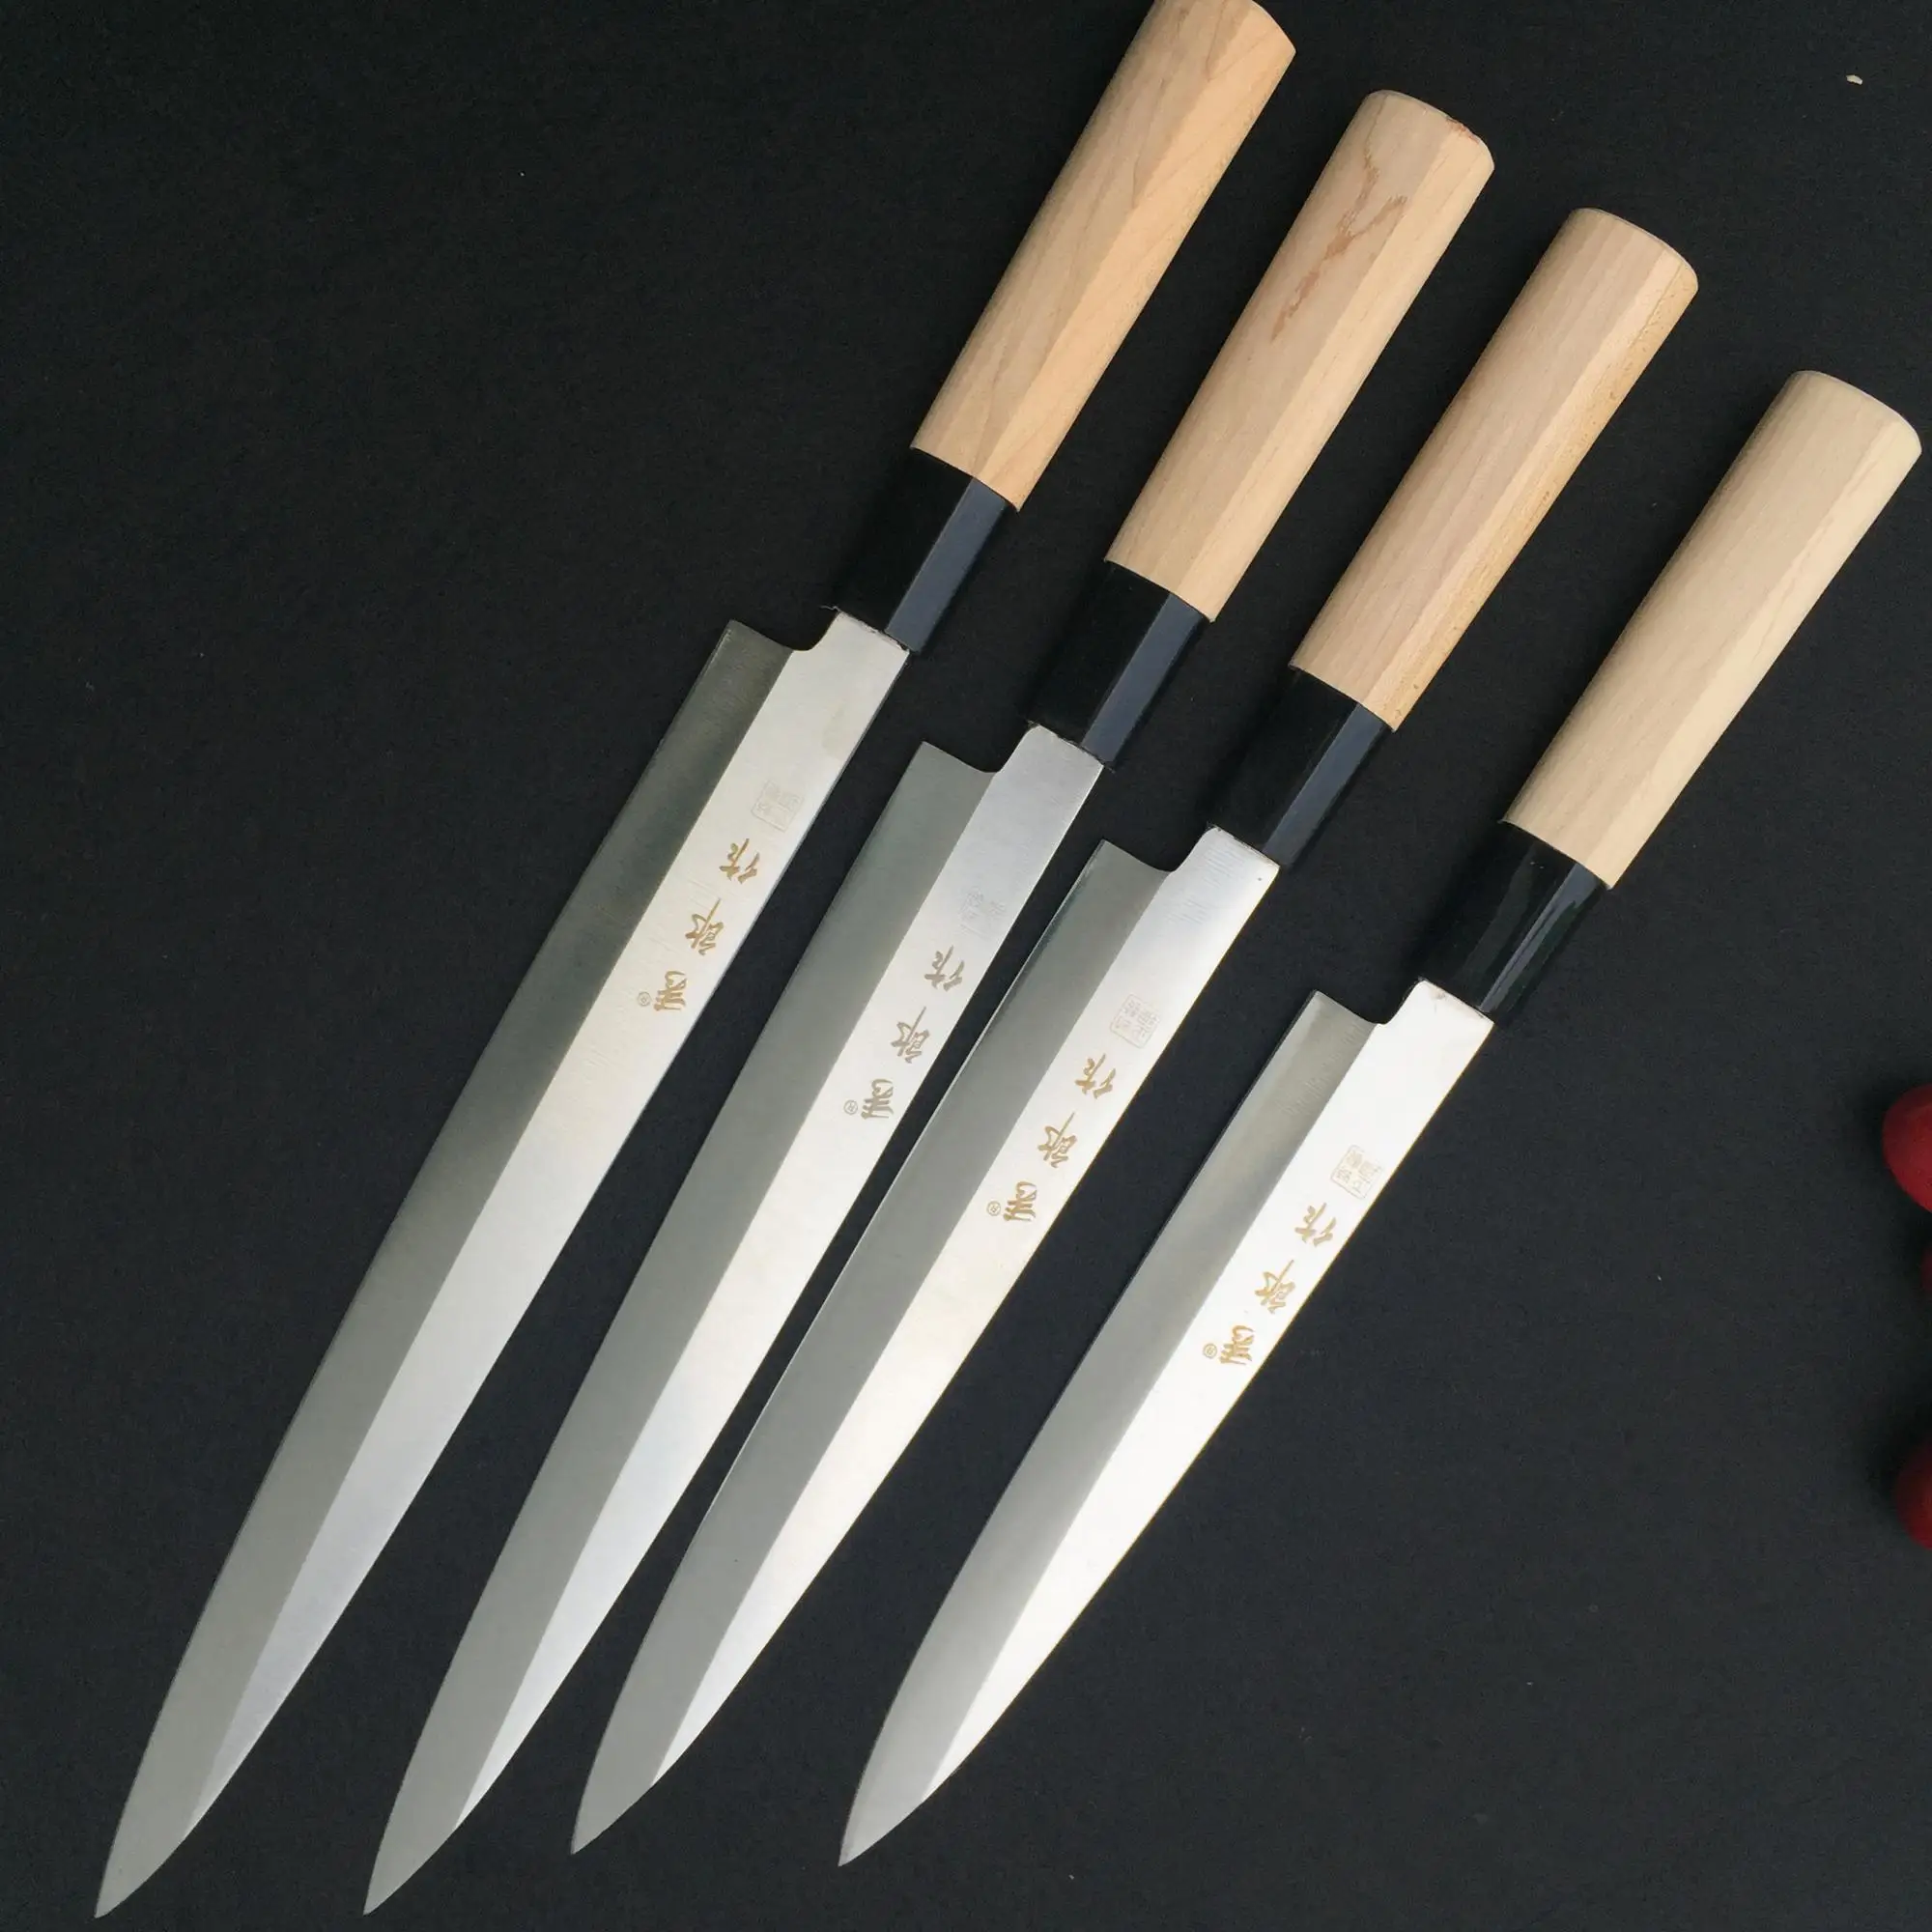 Apa yang dimaksud sushi knife